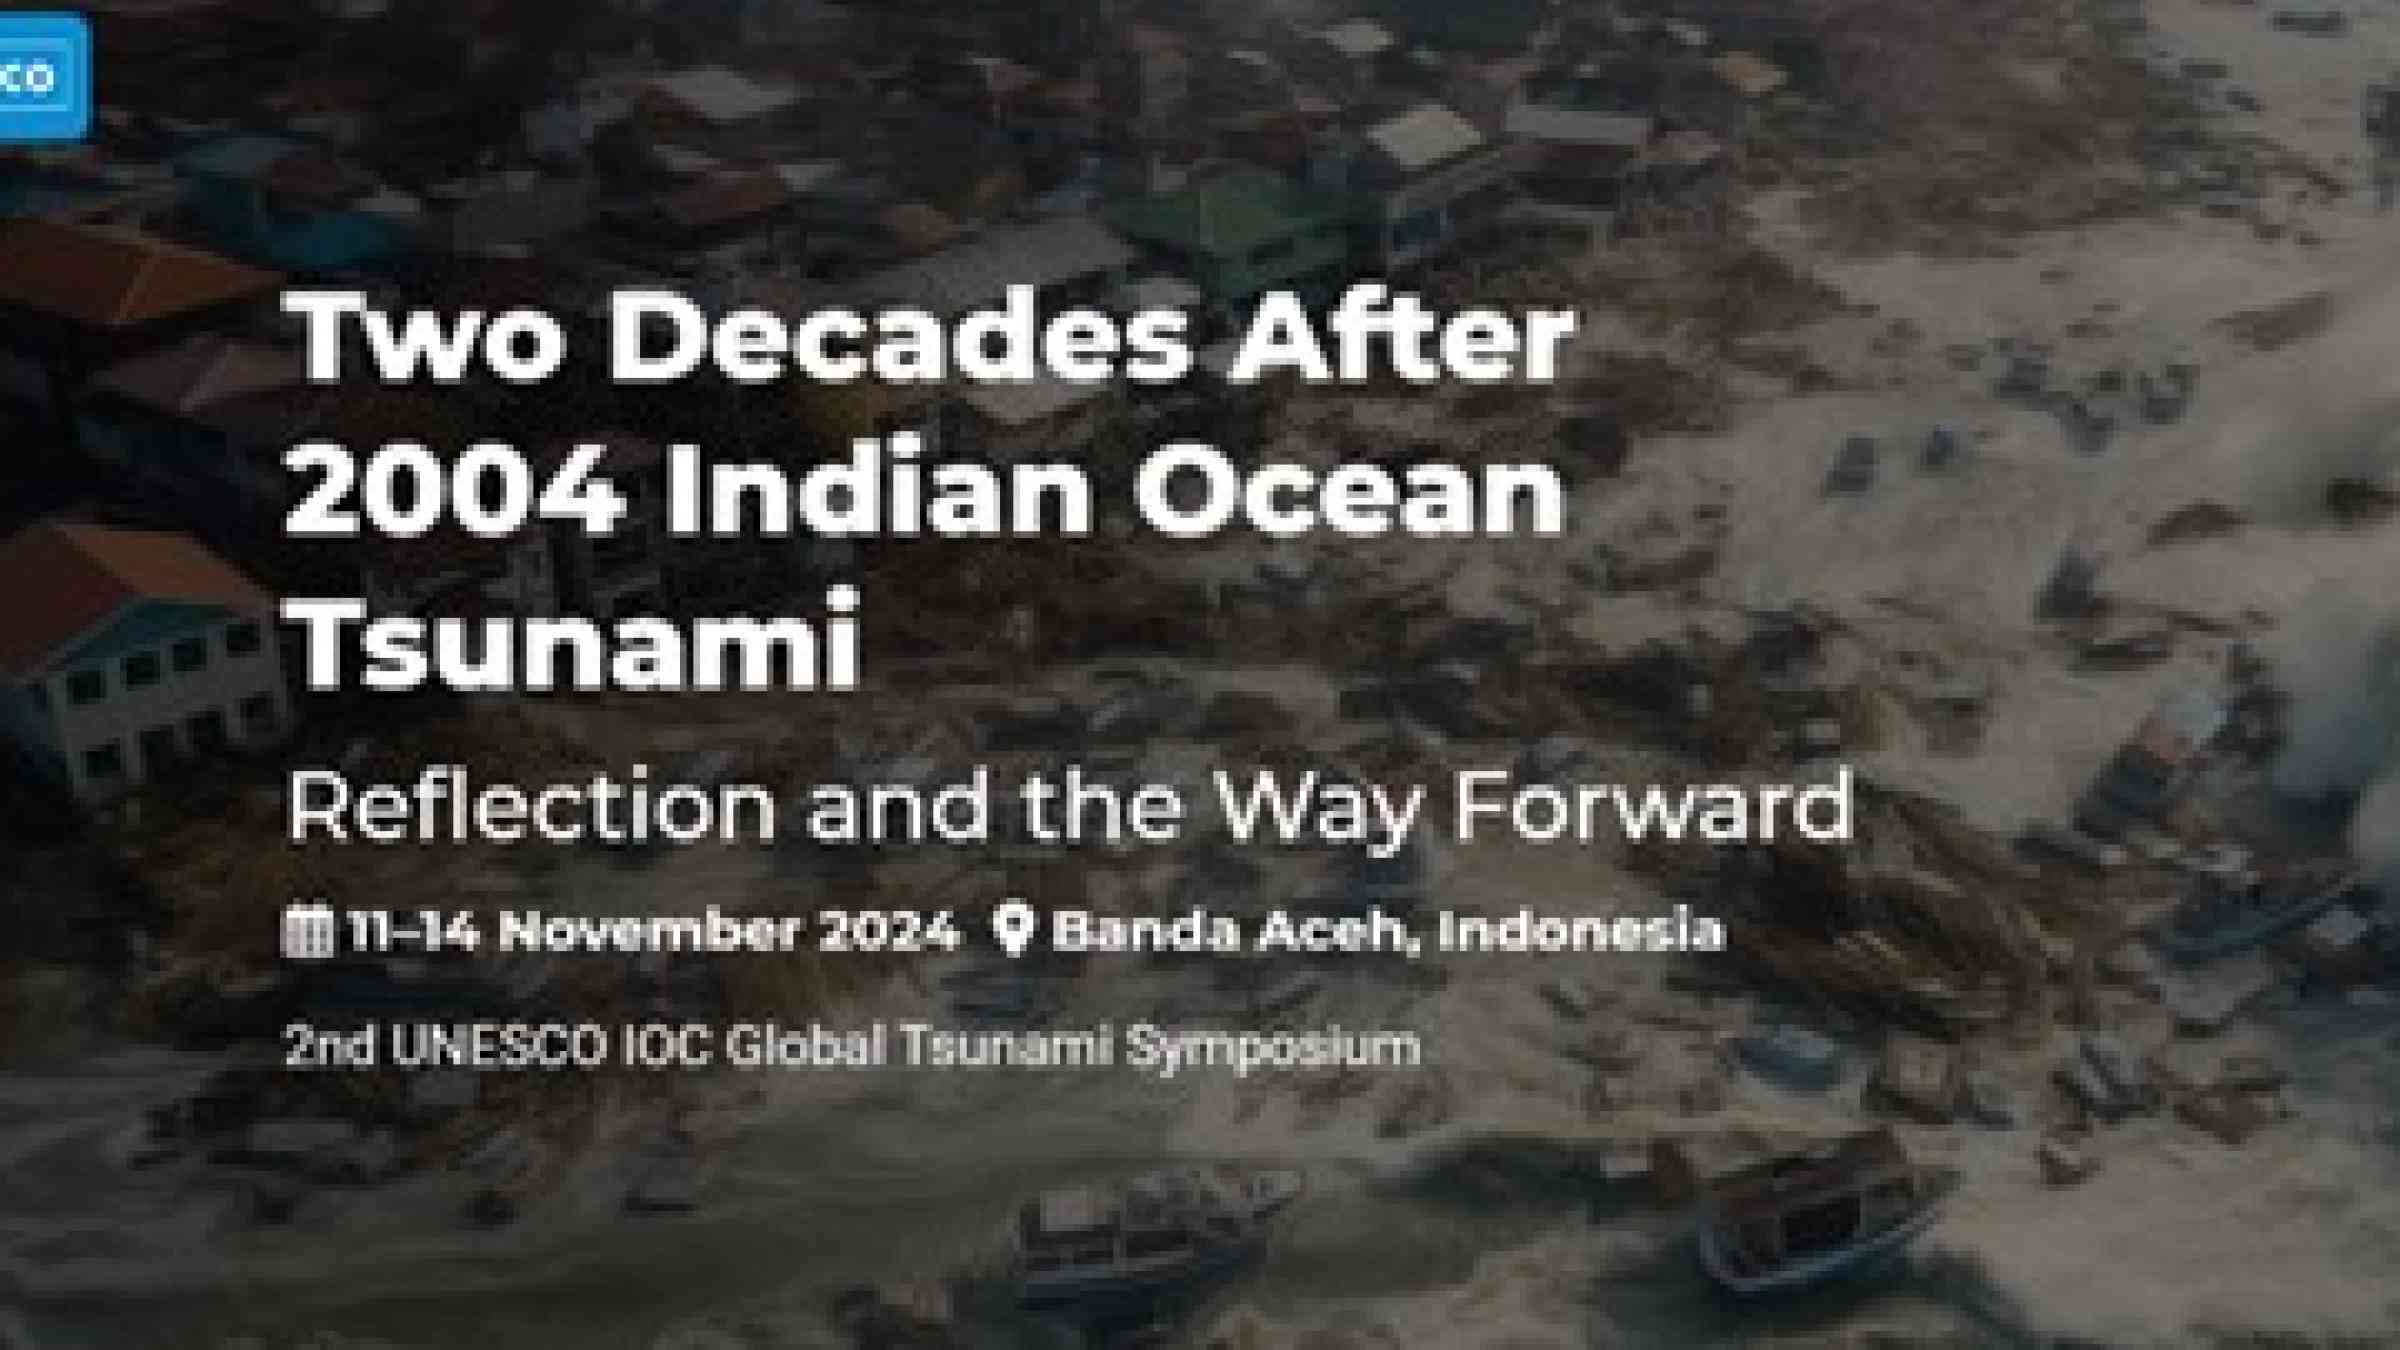 2nd UNESCO IOC Global Tsunami Symposium